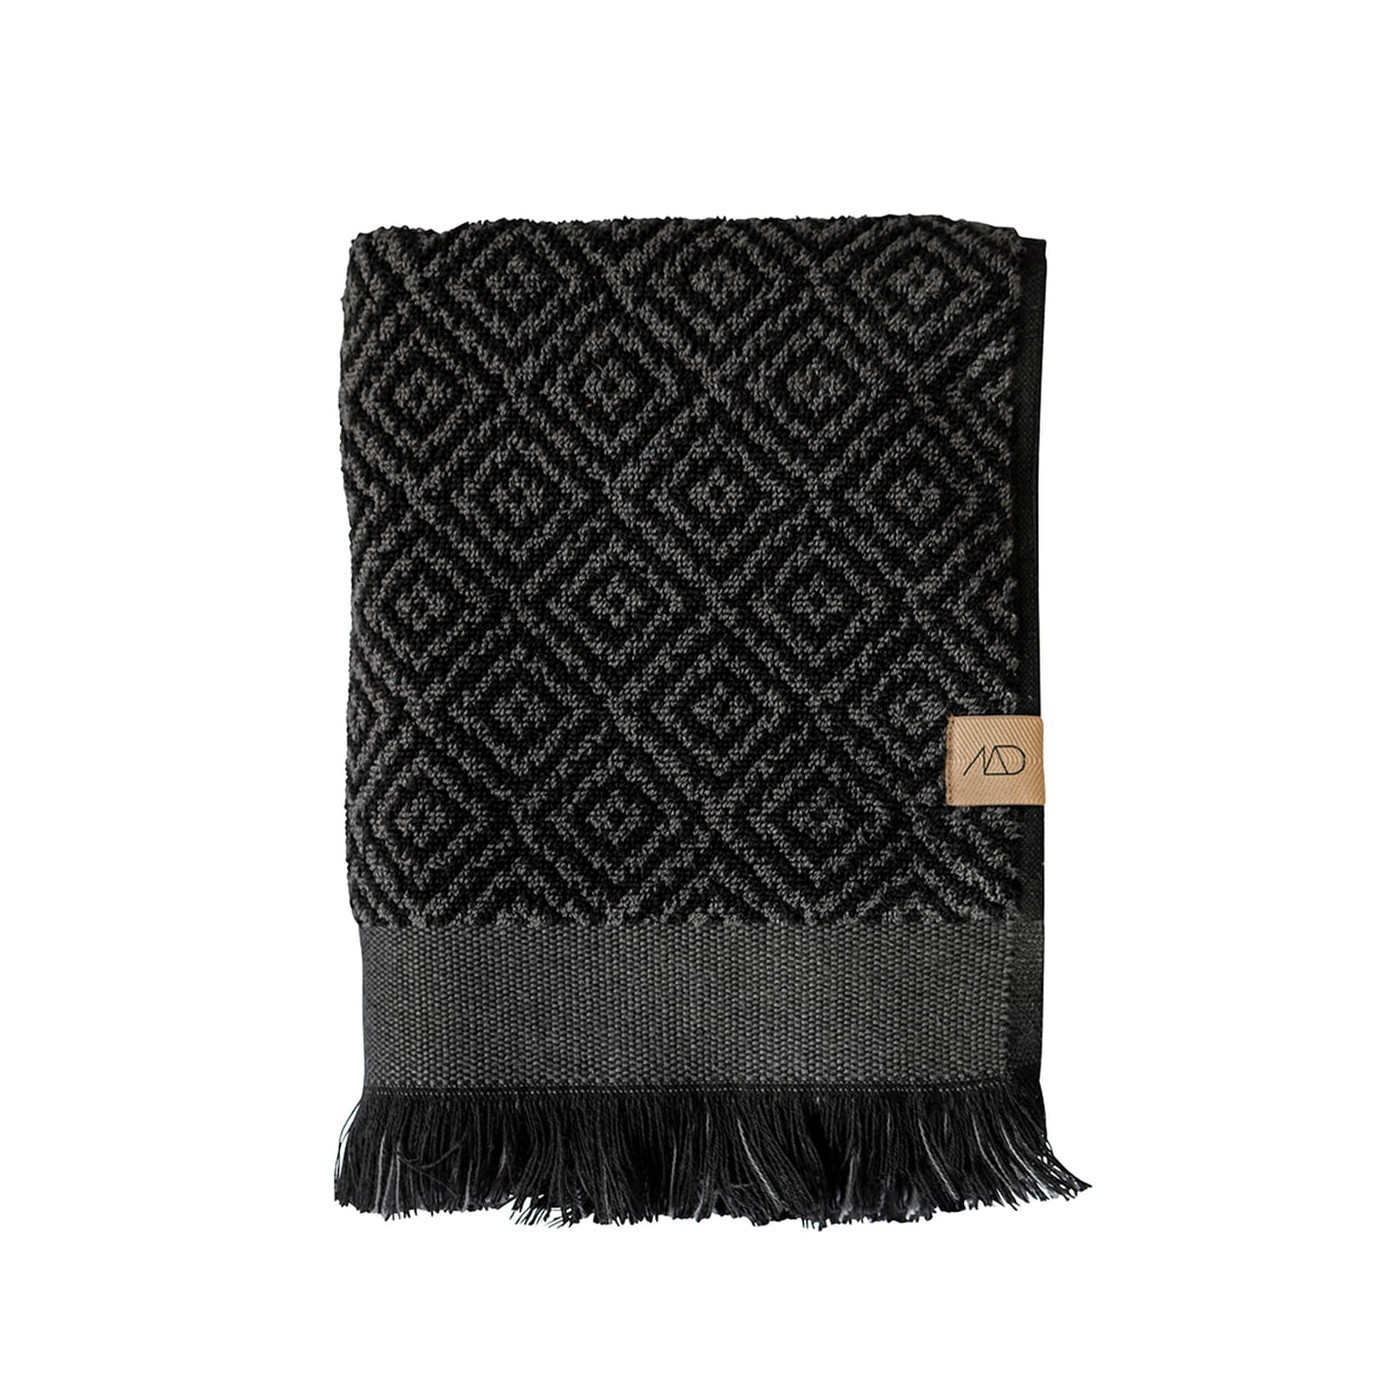 Mette Ditmer - Morocco Towel 50 x 95 cm - Black / Grey